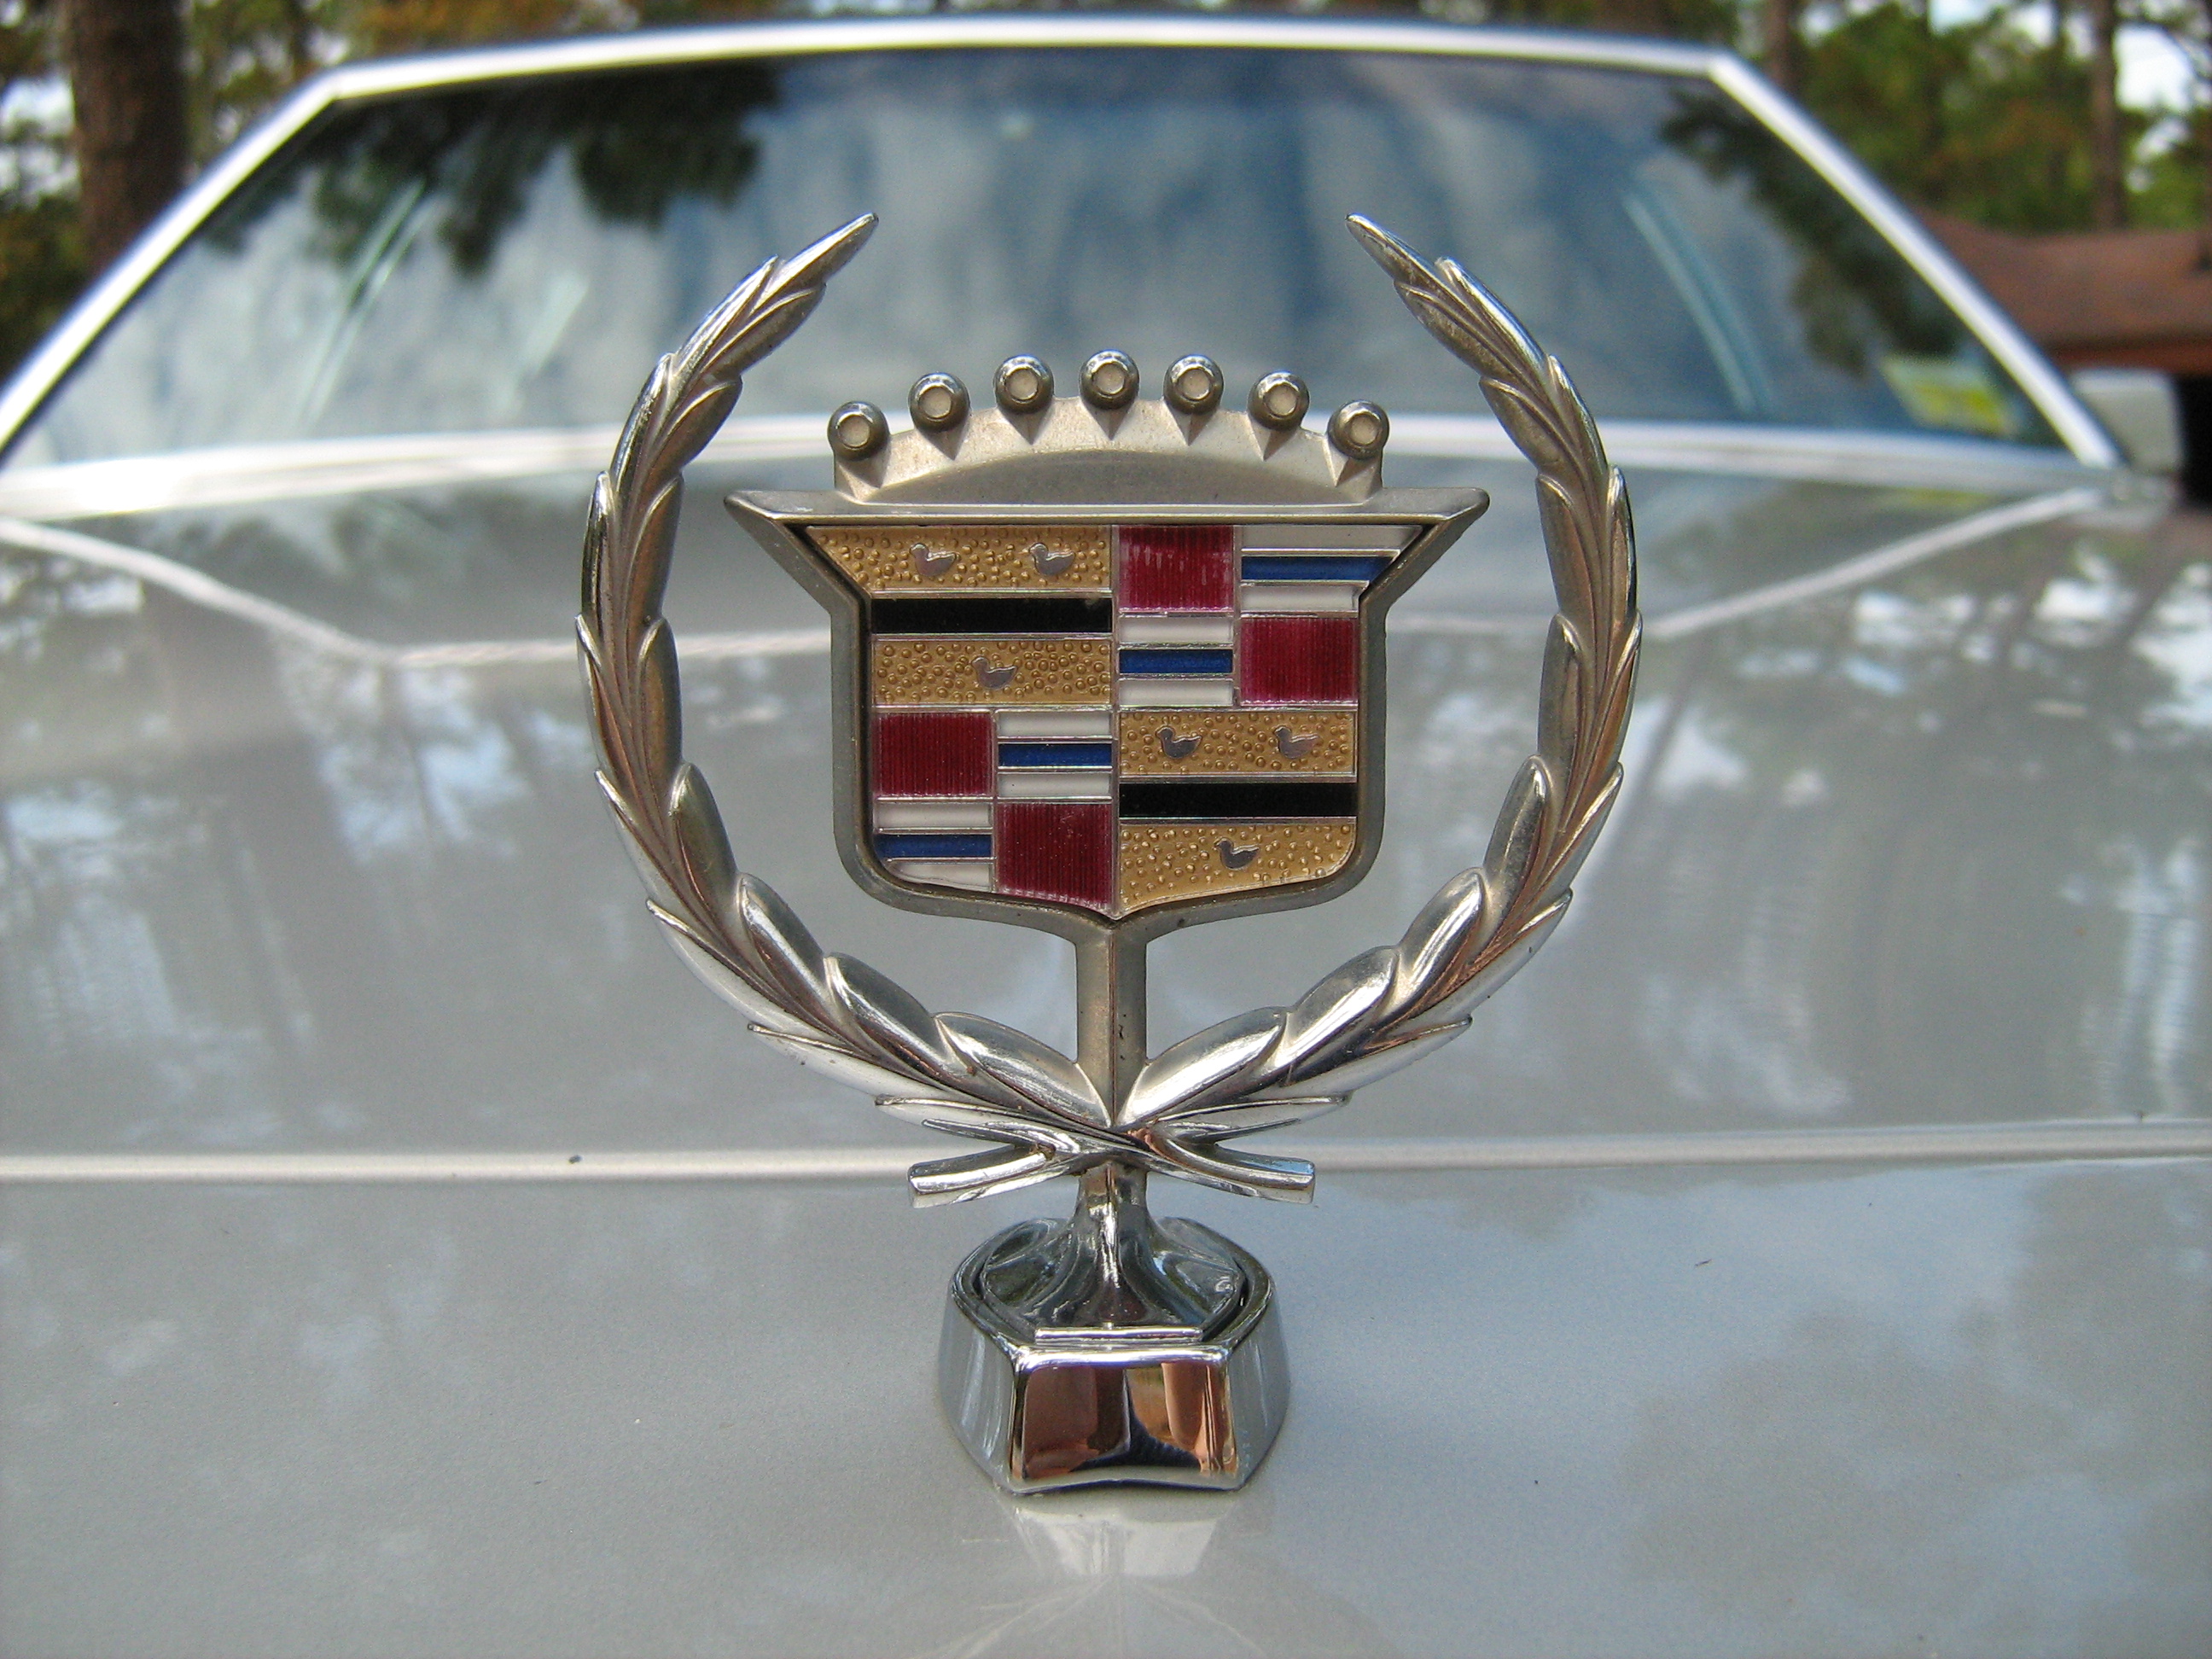 File:1989 Cadillac hood ornament.jpg - Wikimedia Commons